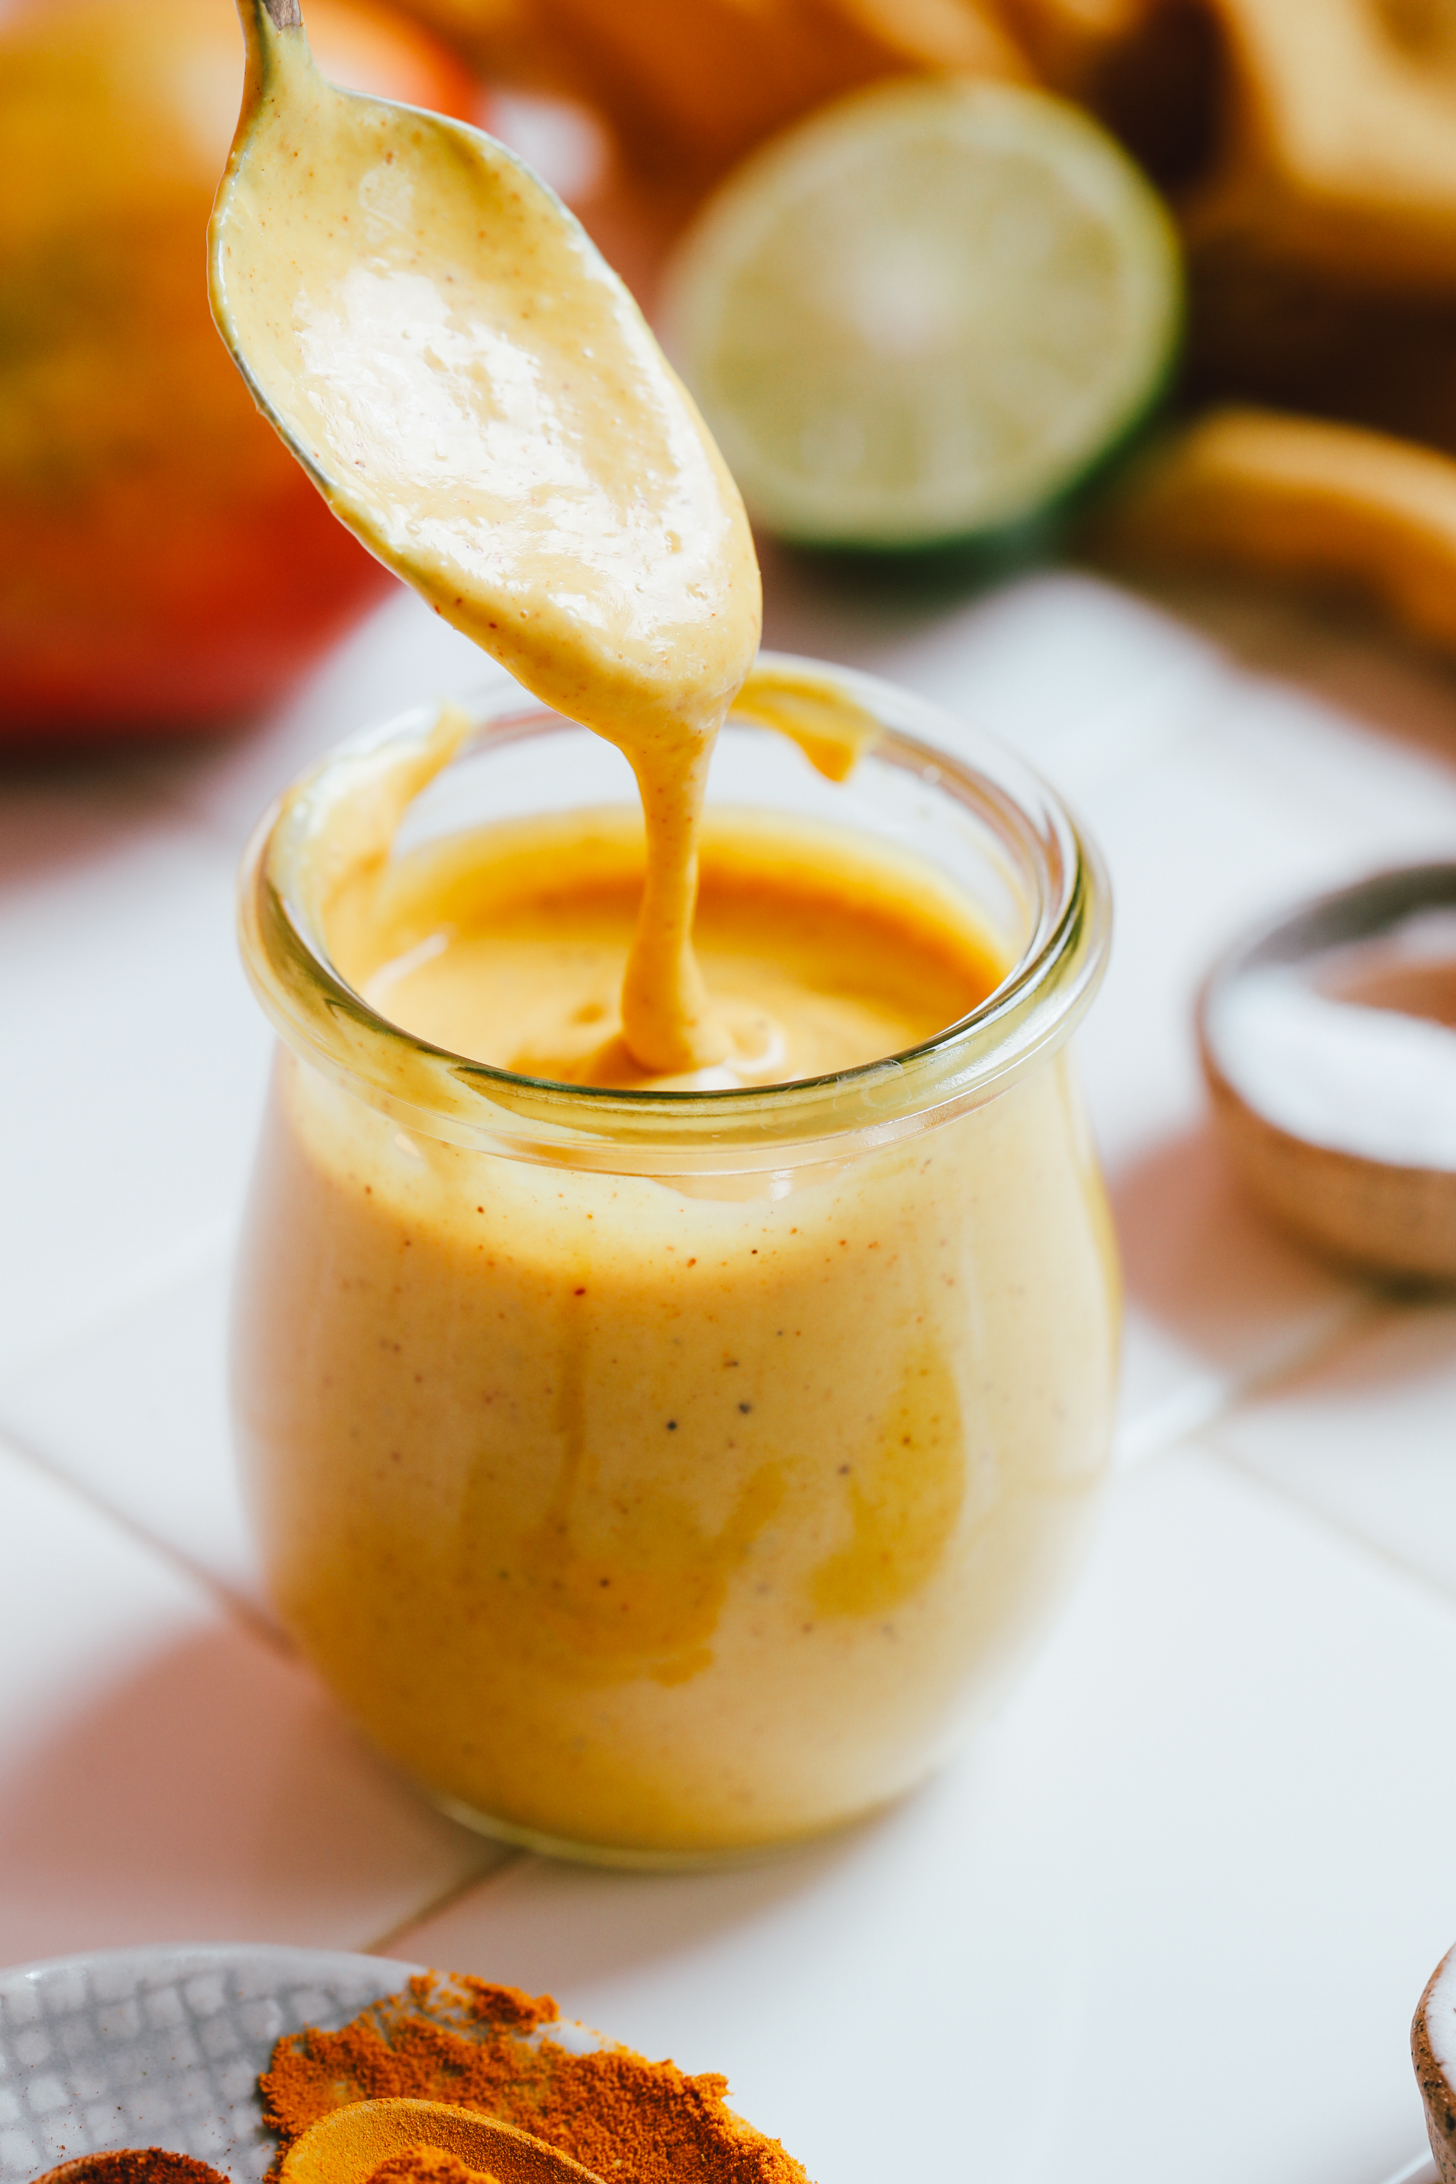 Creamy mango vinaigrette salad dressing dripping from a spoon into a jar